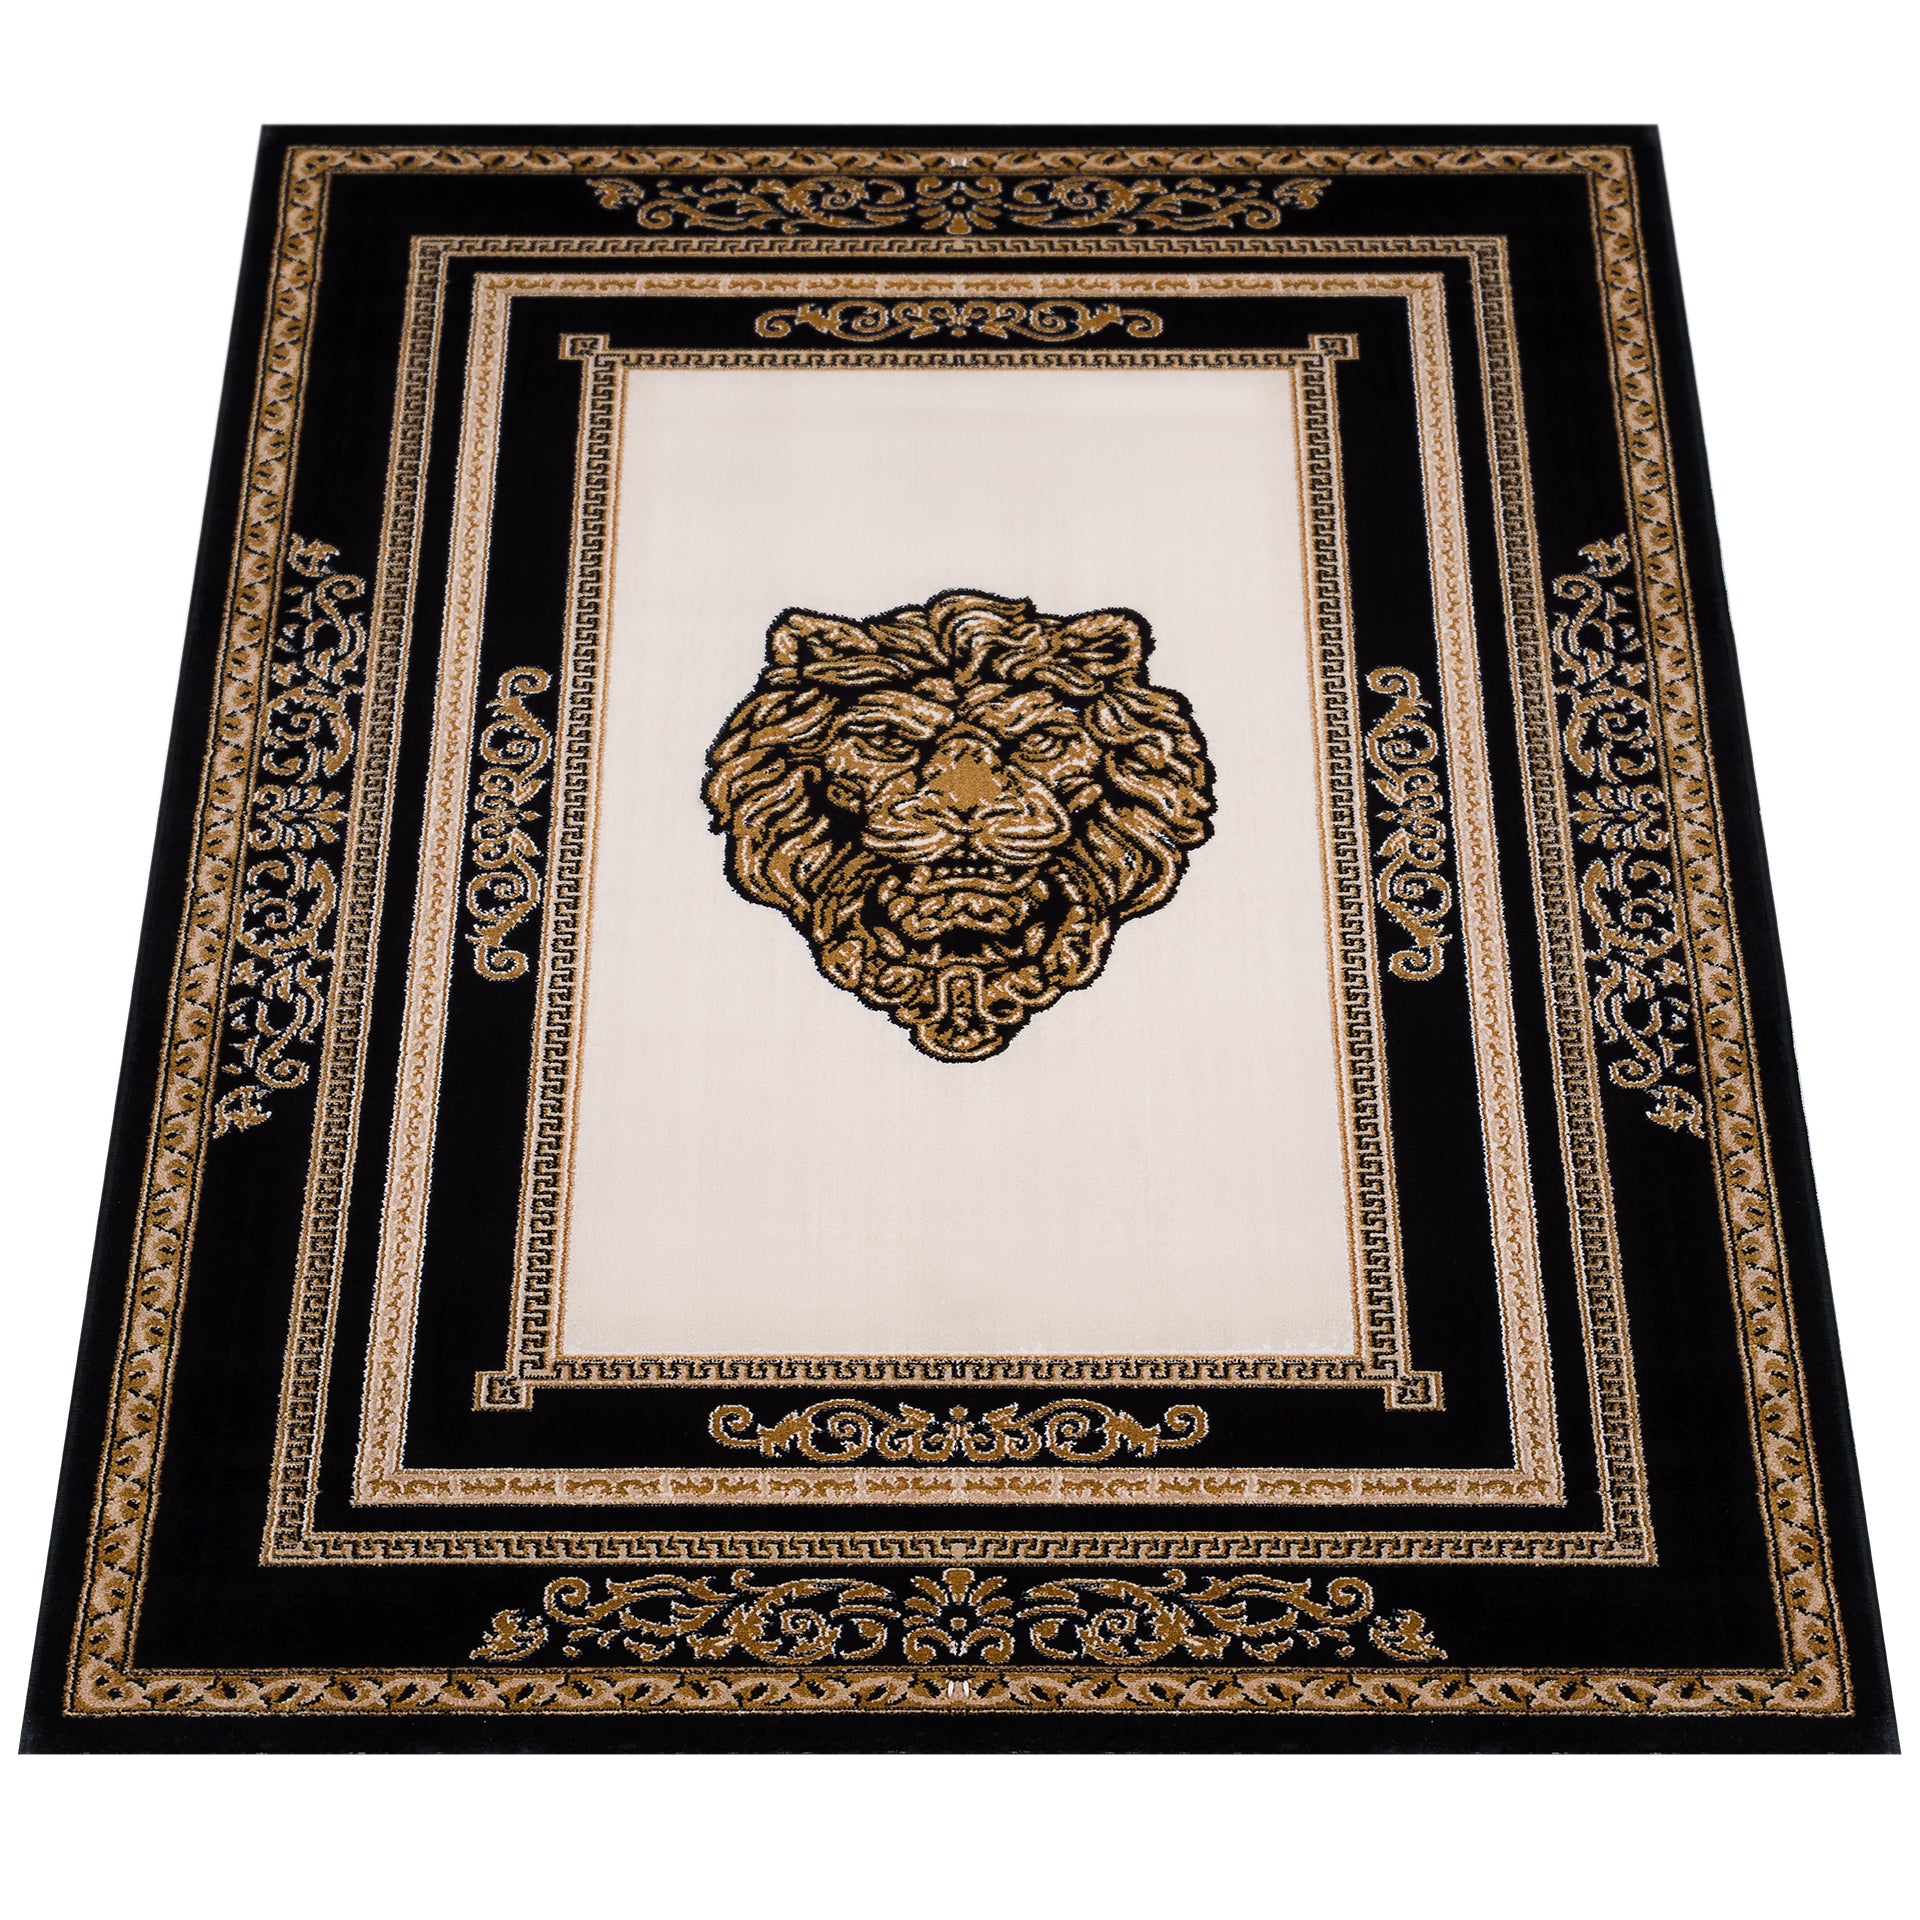 Carpet living room black gold lion head - Italian design - anti-allergic and free of harmful substances